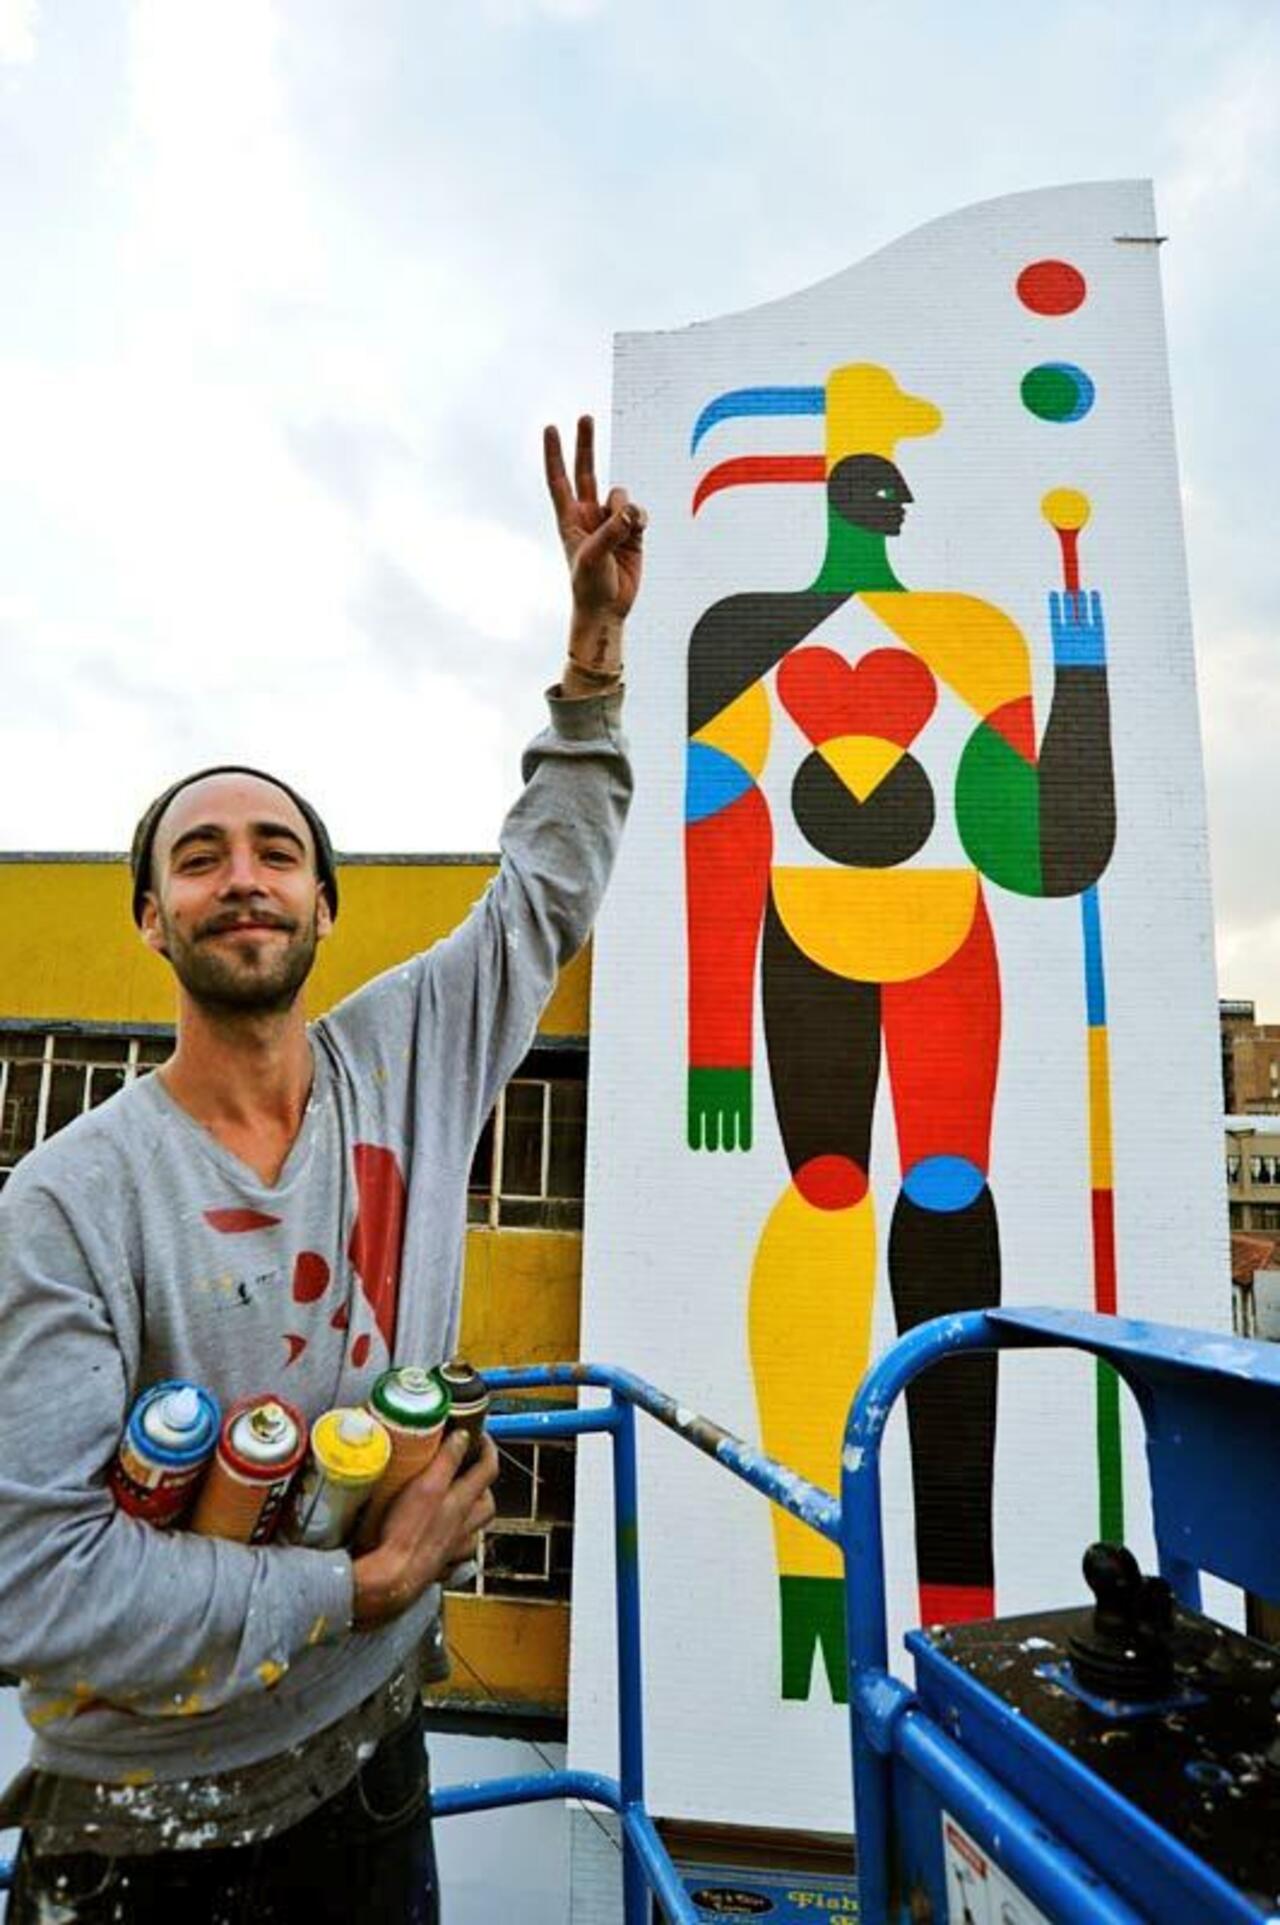 RT @Toupietwopi: ✌”@Pitchuskita: Remed 
South Africa 
#streetart #art #graffiti #mural http://t.co/rySsAY5EnB”